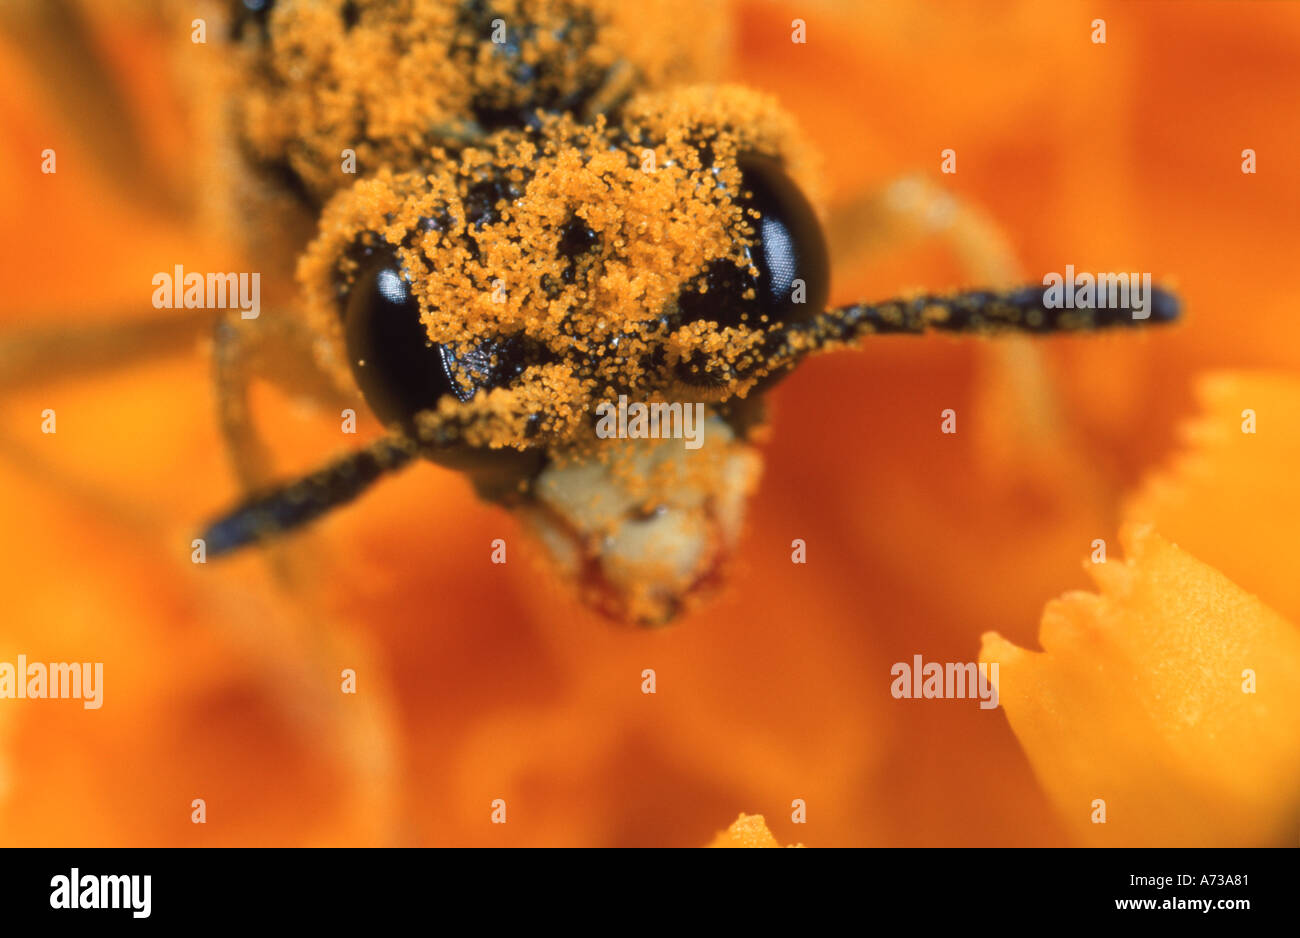 Hymenopteran pollinating feeding on flower Pyrenees Spain Stock Photo